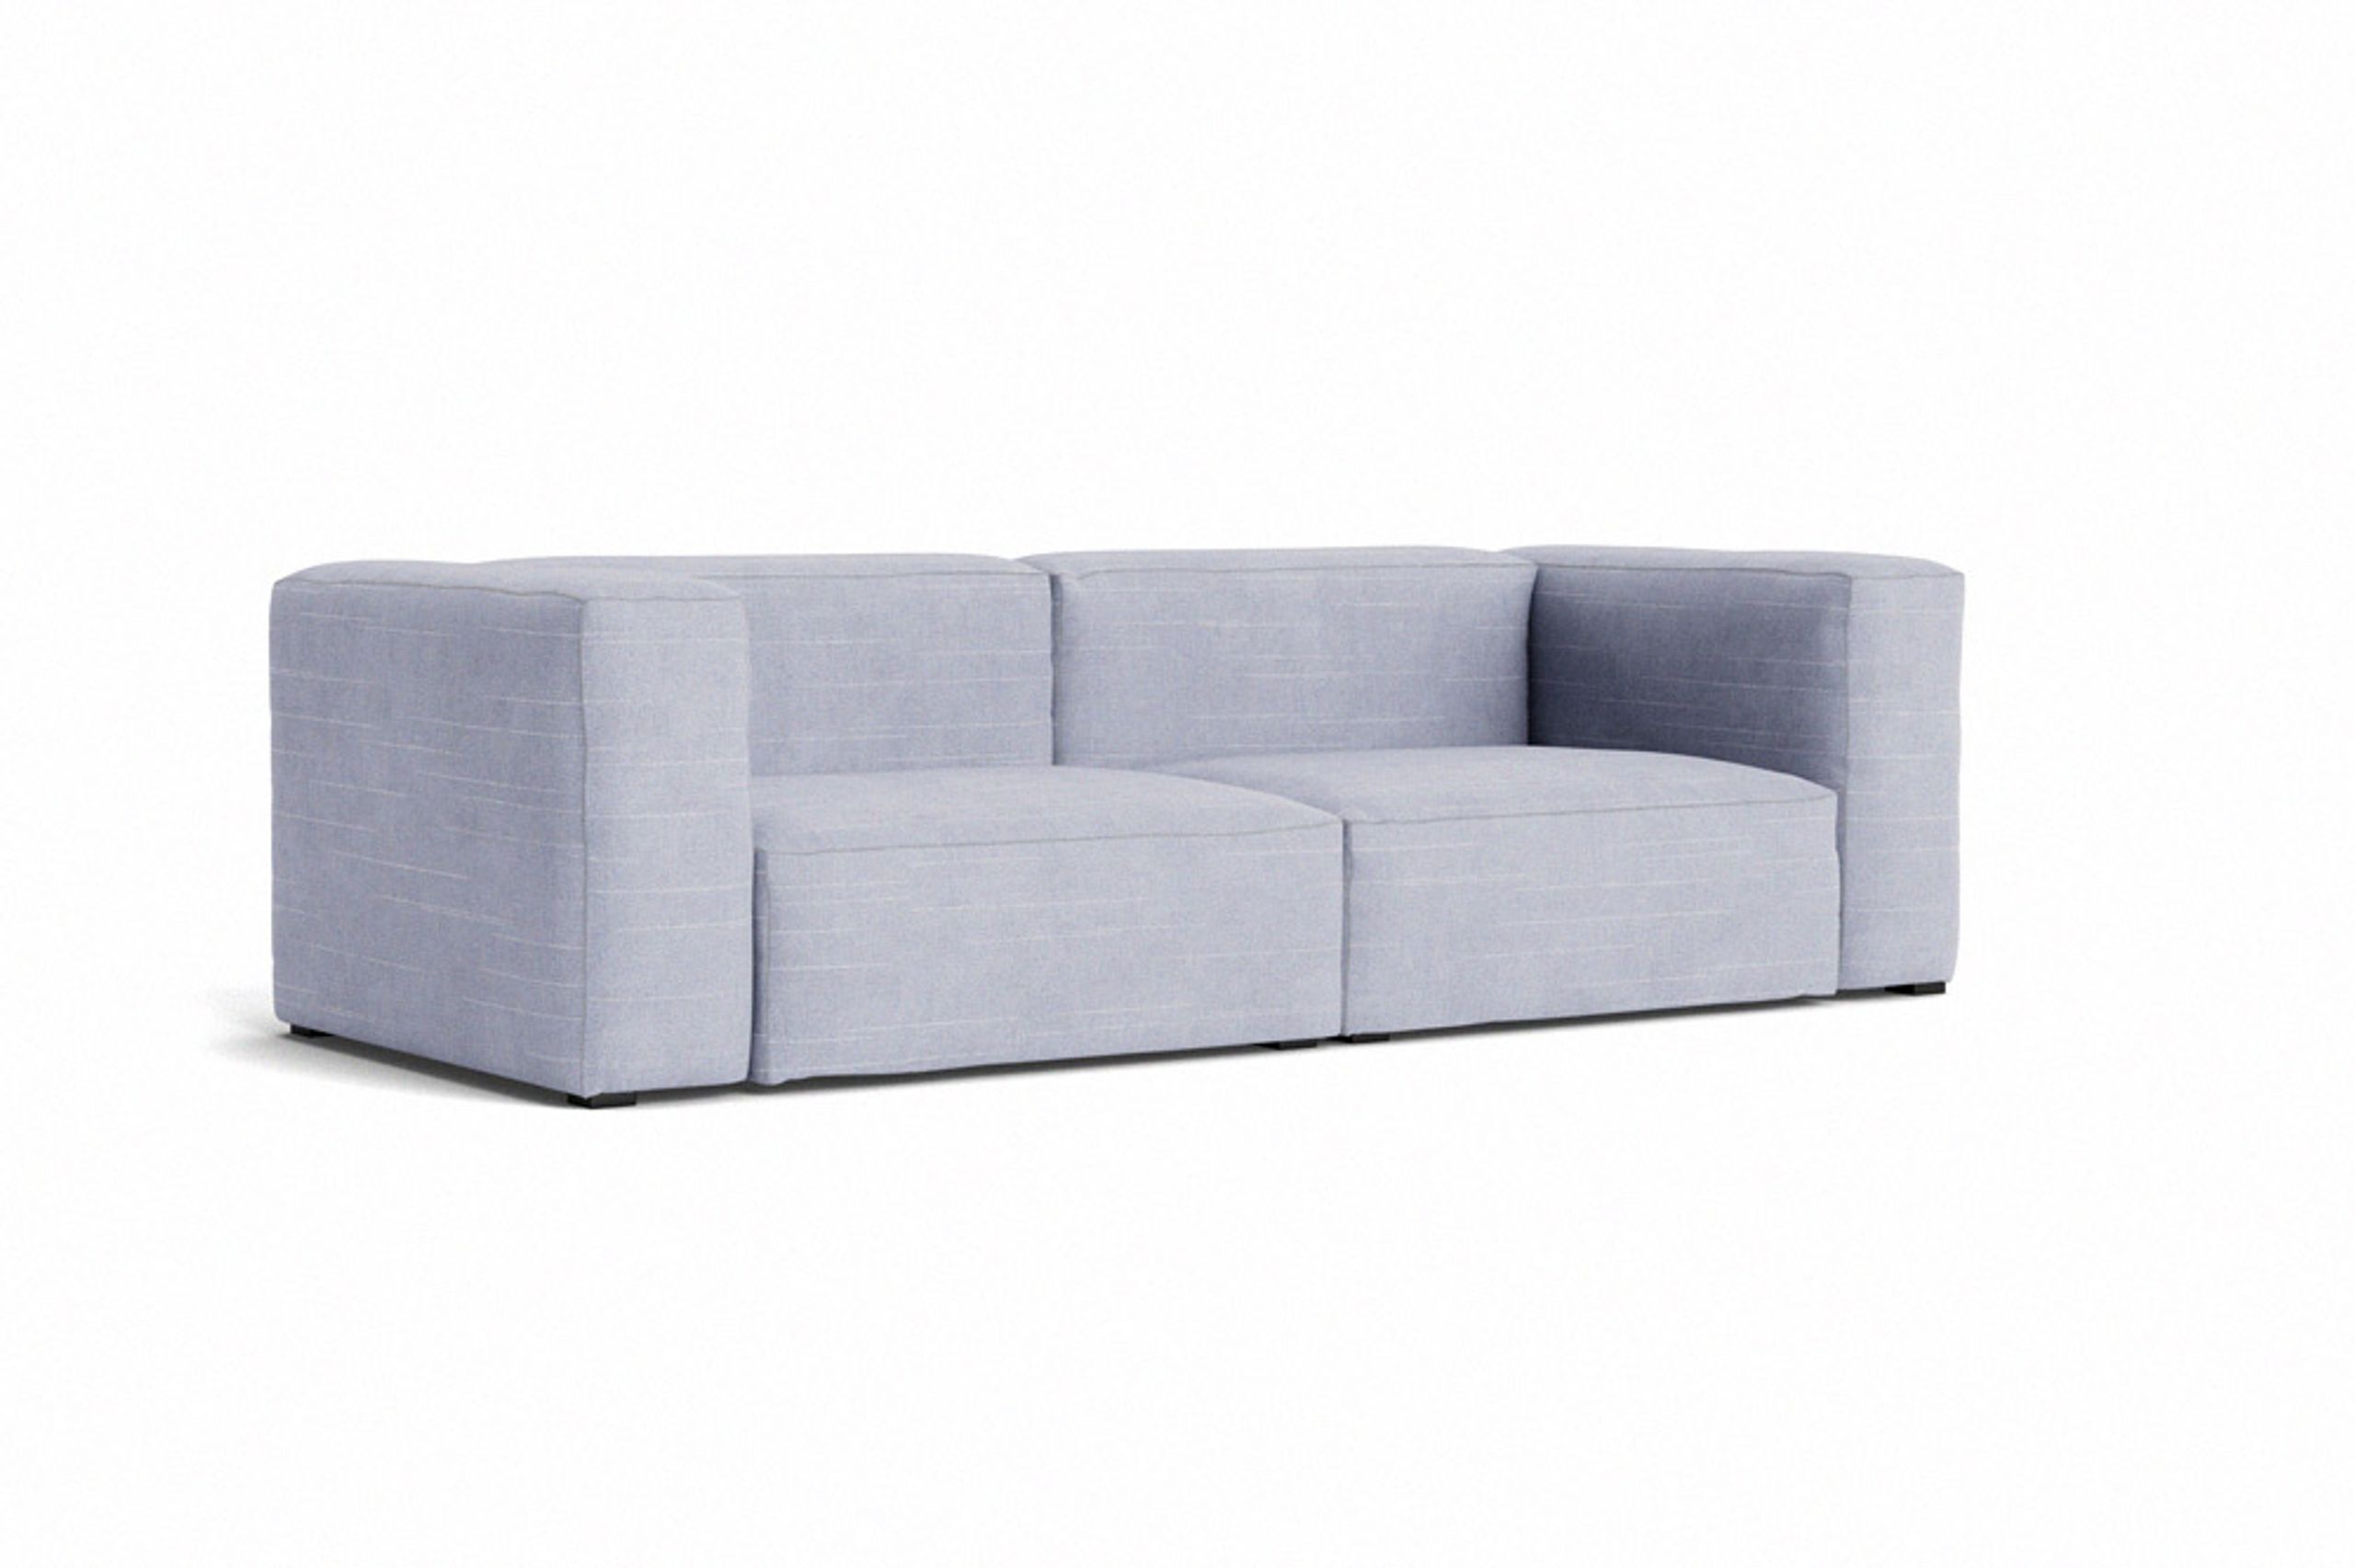 HAY - Sofa - Mags Soft Sofa / 2.5 Seater - Combination 1 / Random Fade Lilac